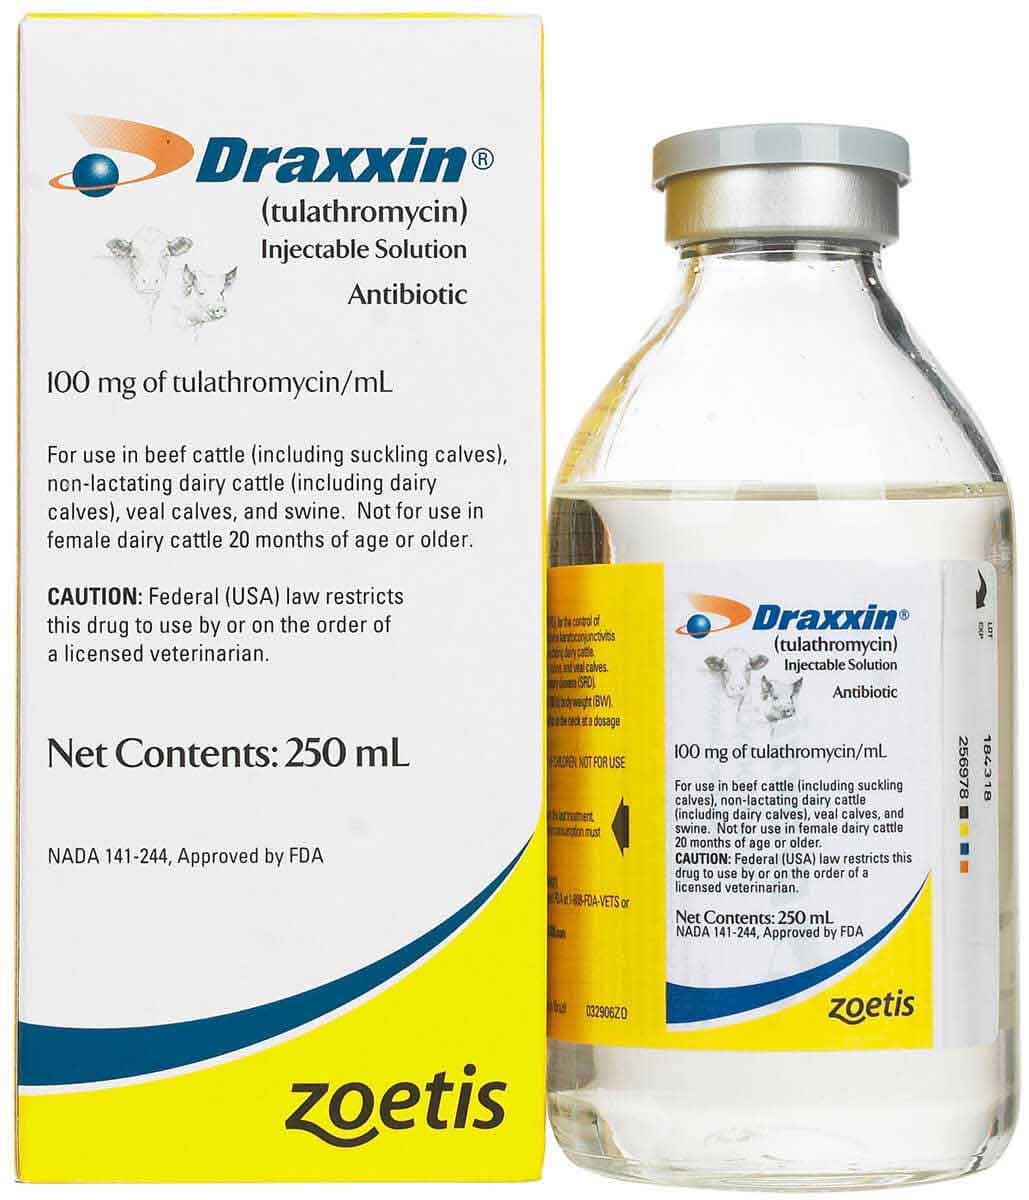 draxxin-tulathromycin-for-cattle-and-swine-zoetis-animal-health-safe